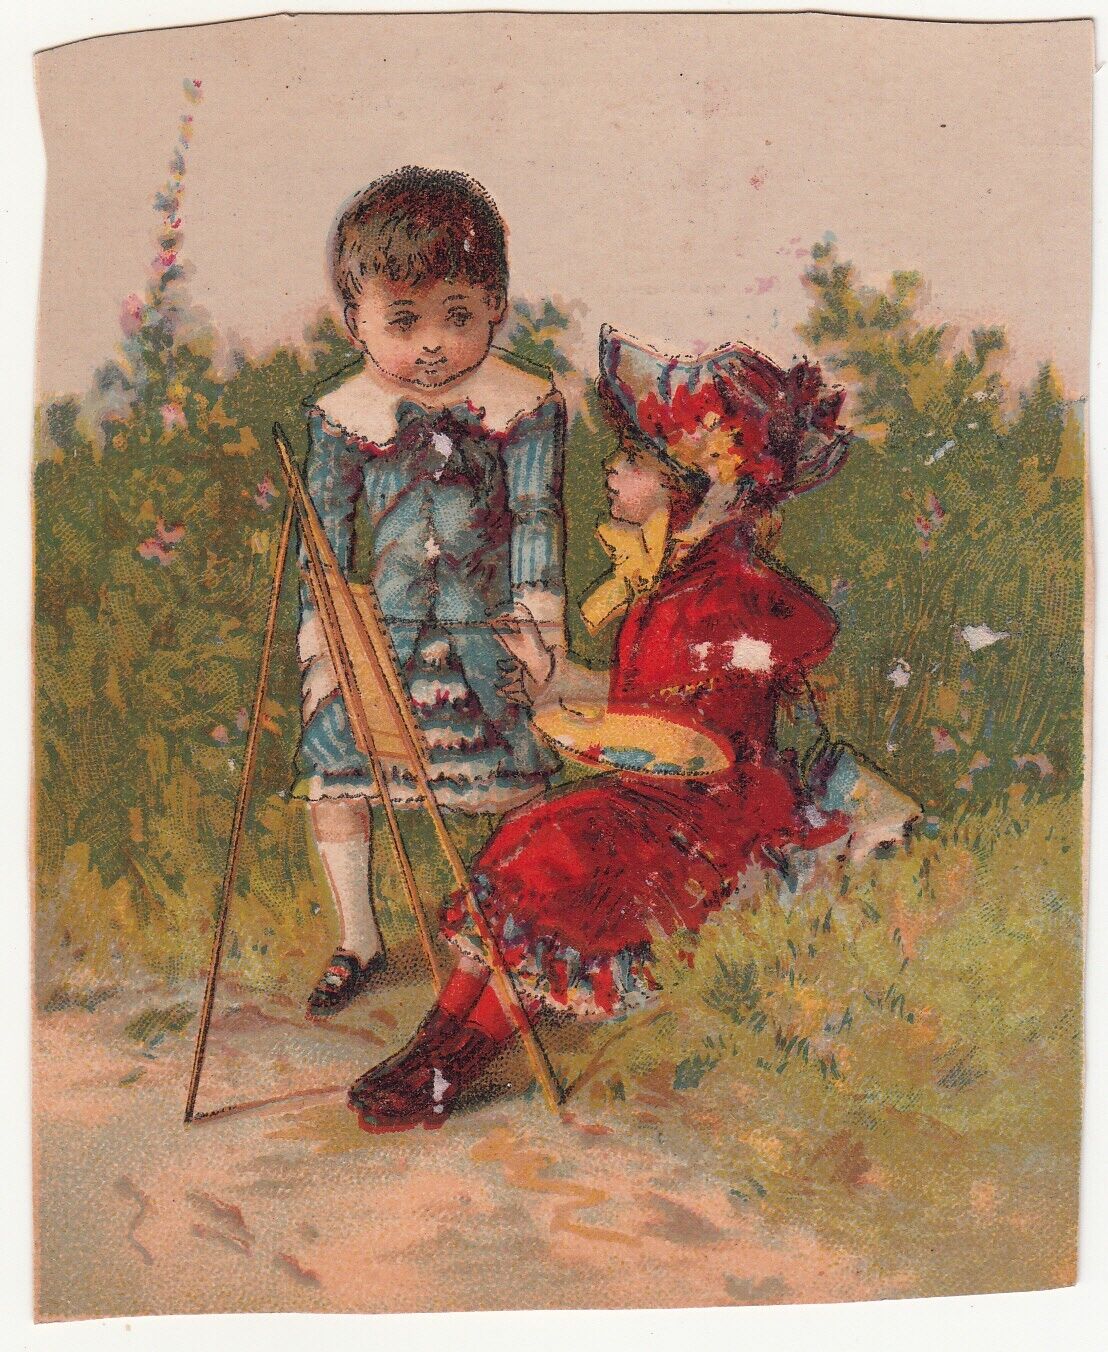 Stoutenburgh & Co Clothing Newark NJ Child Artist in Field Vict Card c1880s